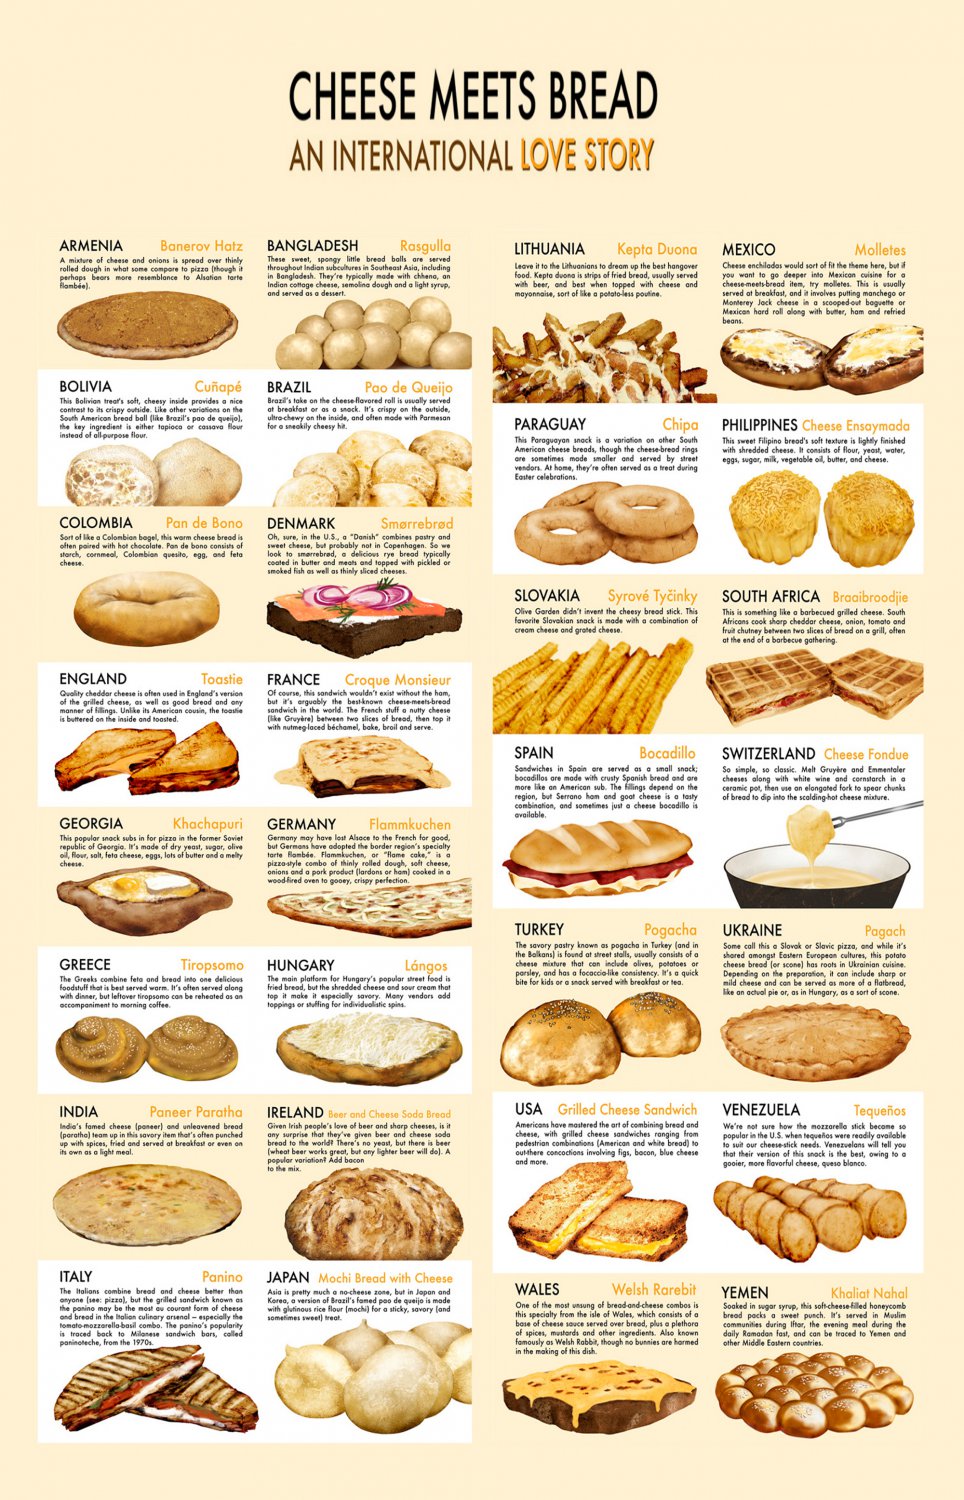 Cheese meets bread an international love story Chart 18"x28" (45cm/70cm) Poster